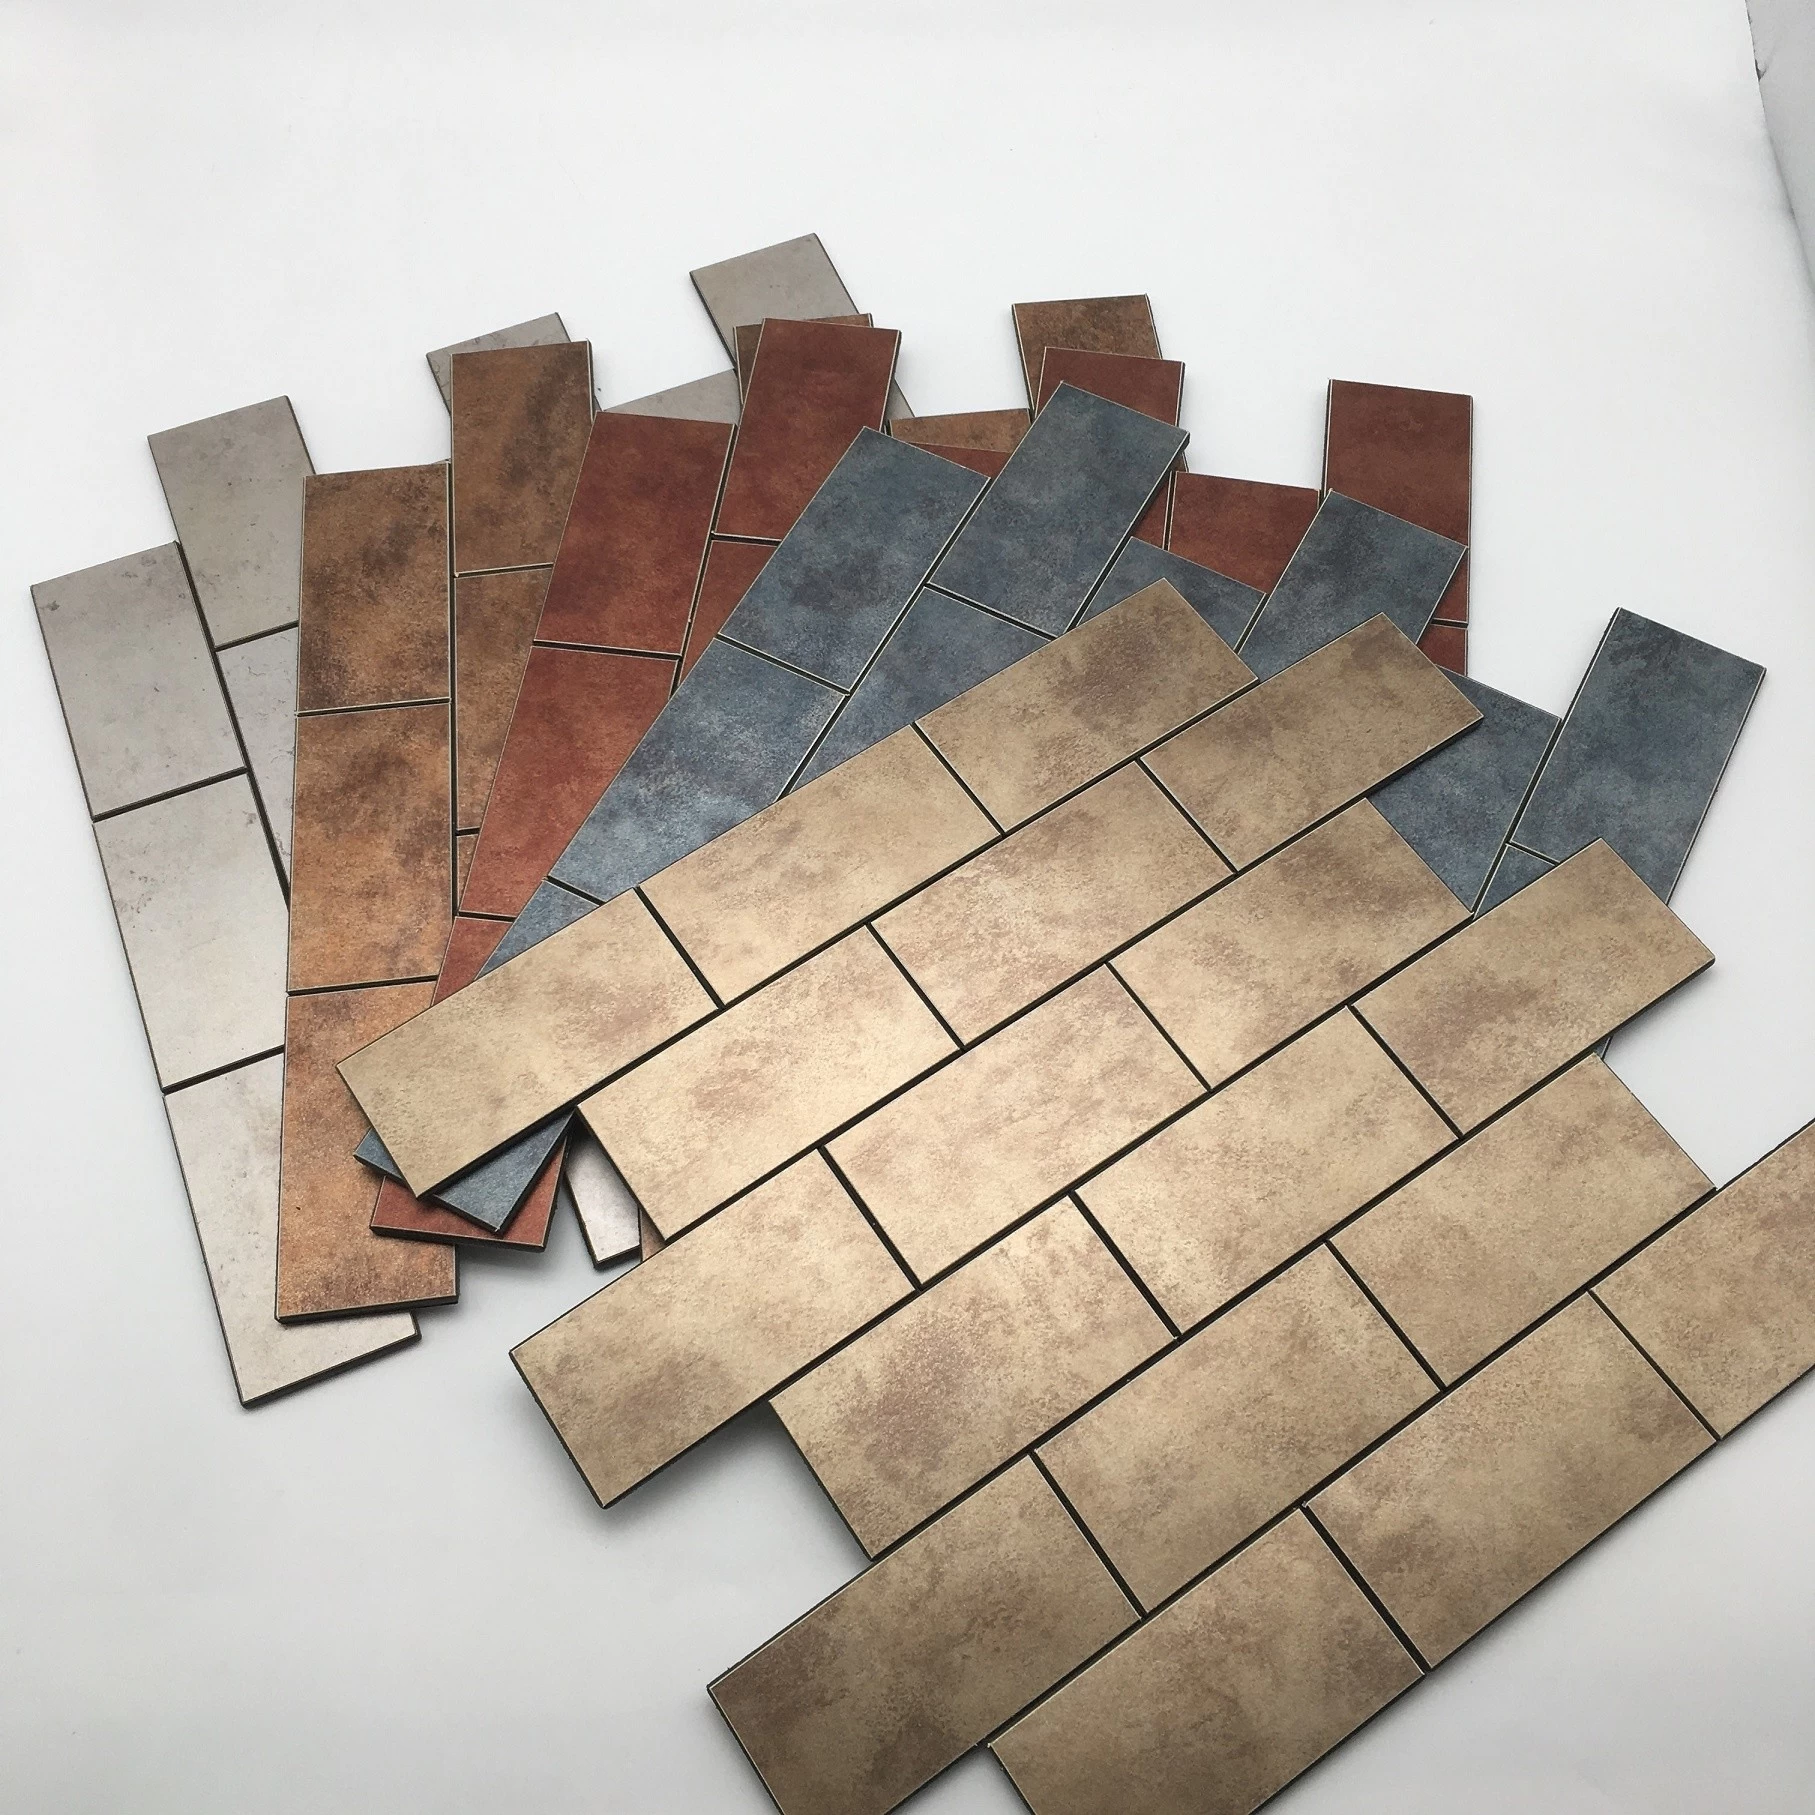 Rustic red Self Adhesive Wall Tile  Peel and Stick Wall Tiles Backsplash mosaic tiles